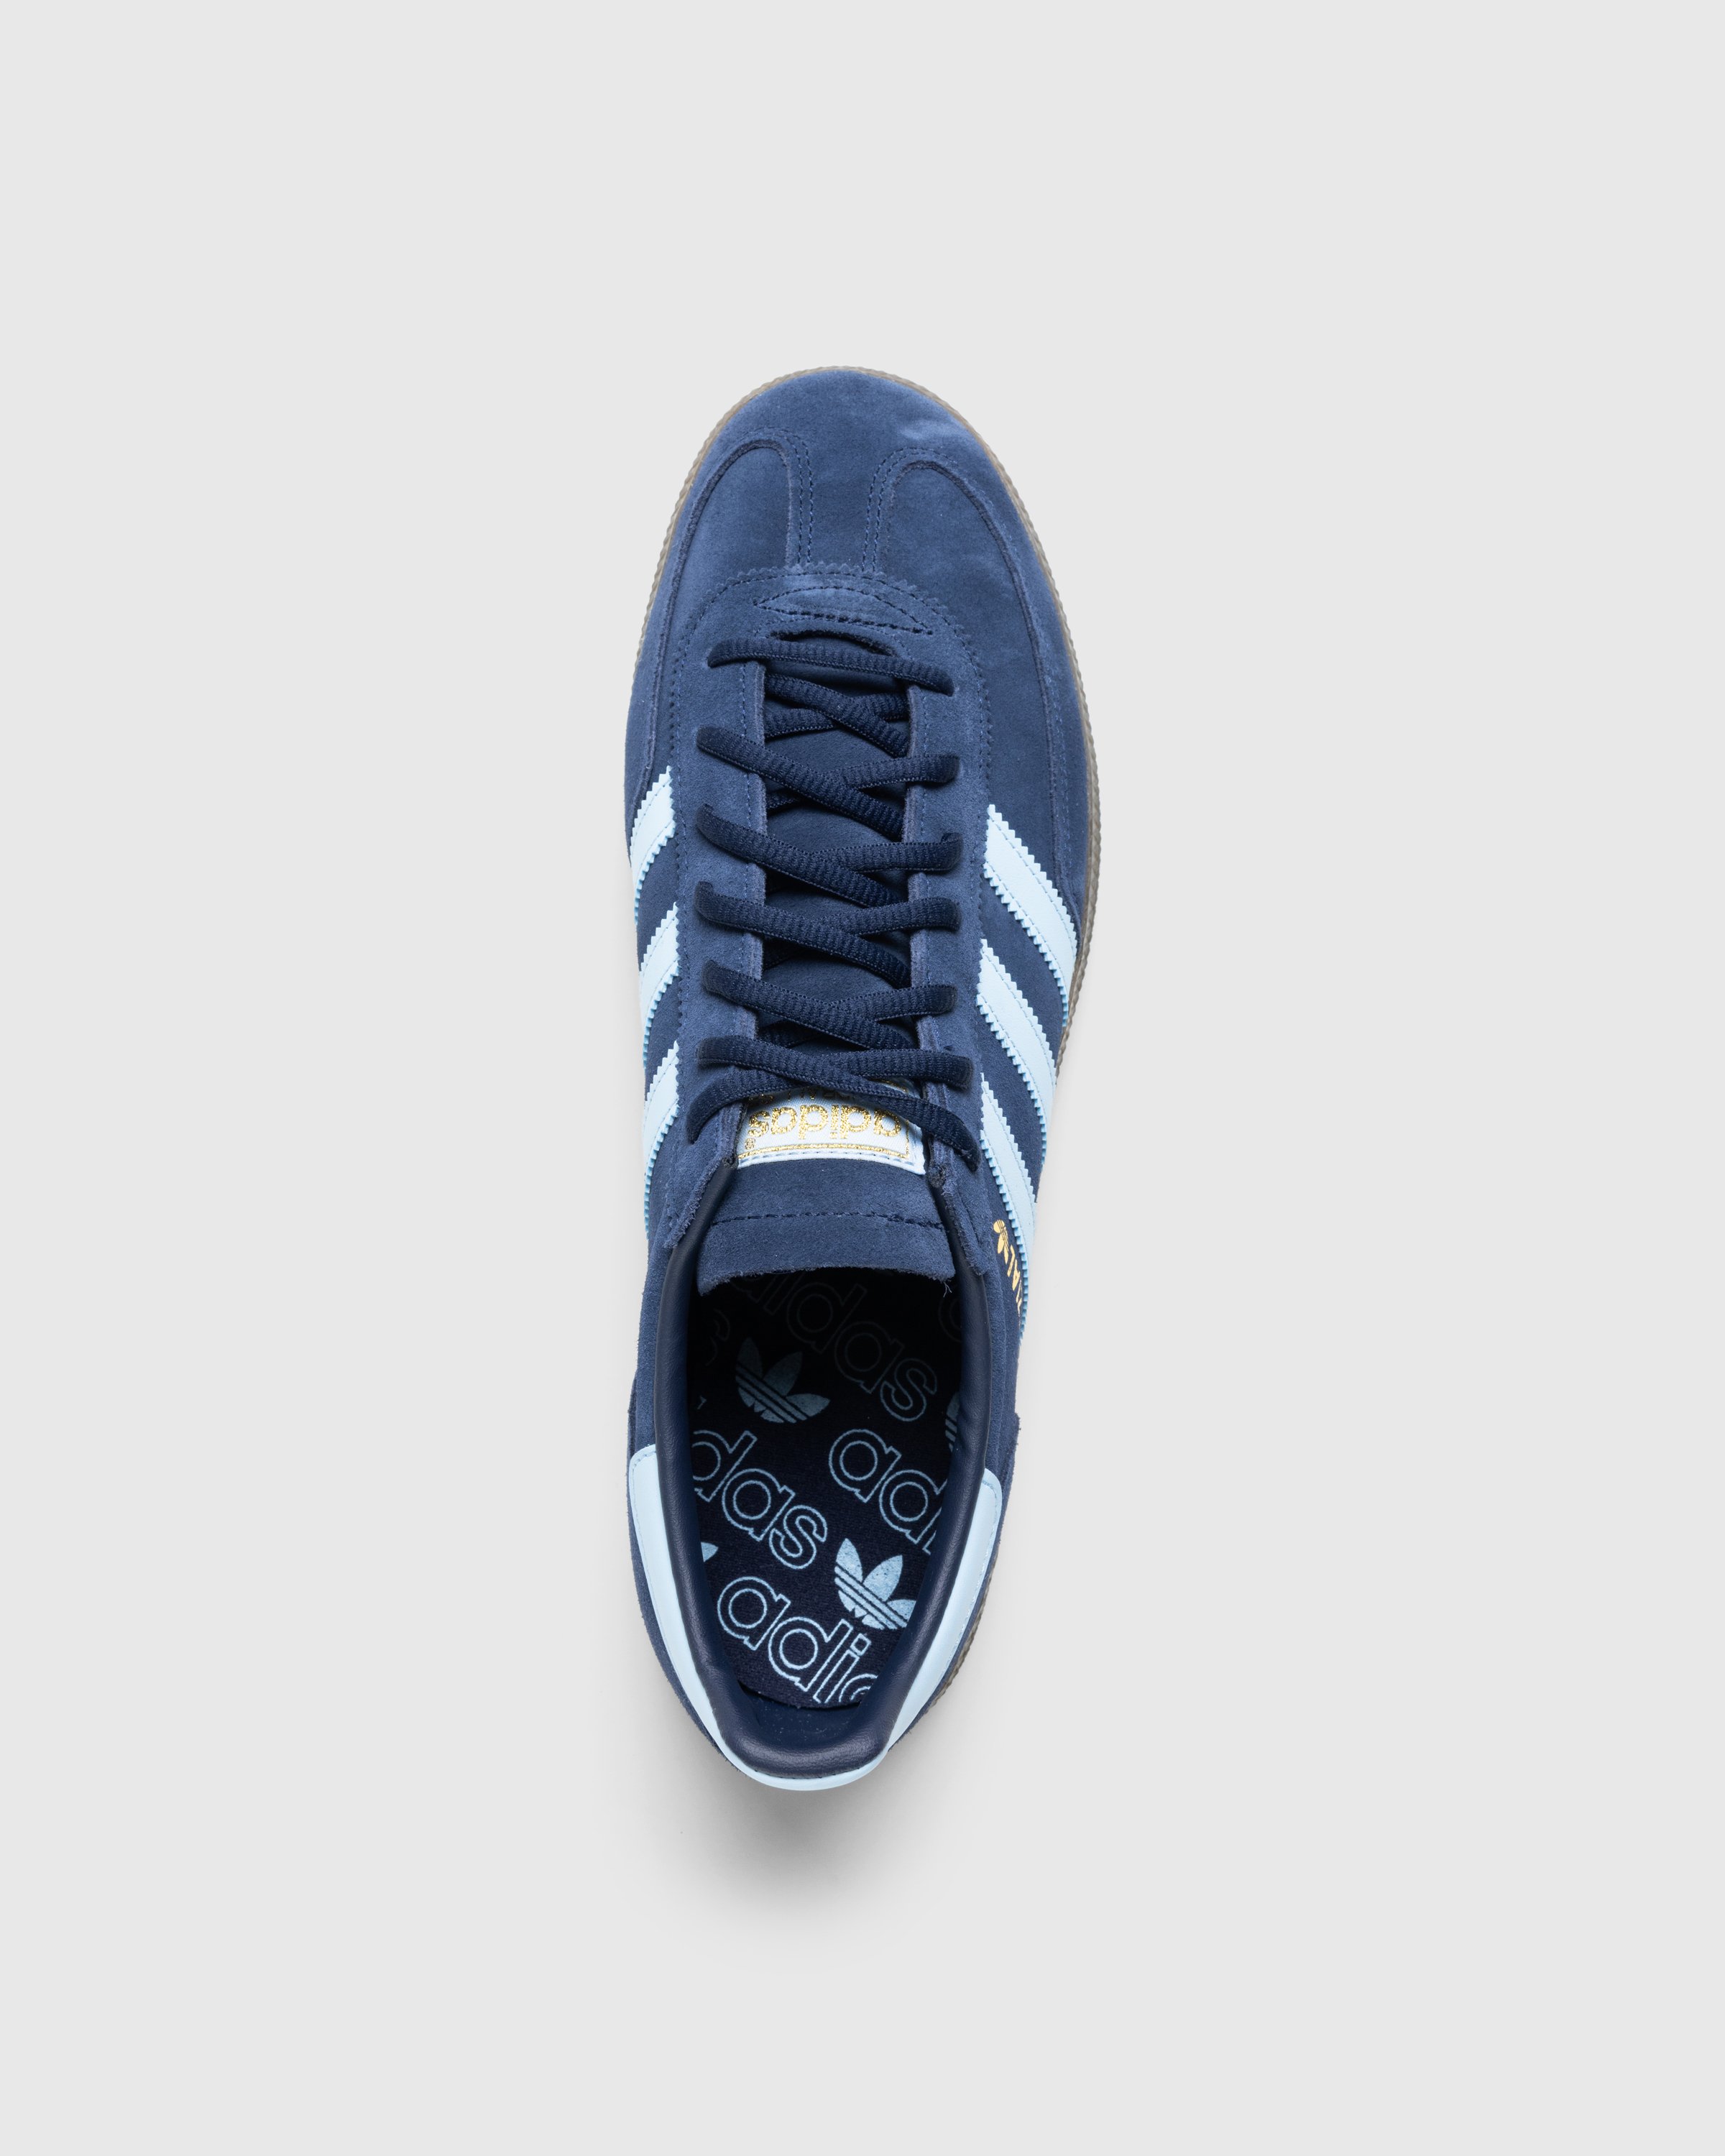 Adidas - Handball Spezial    Conavy/Clesky/Gum5 - Footwear - Blue - Image 5